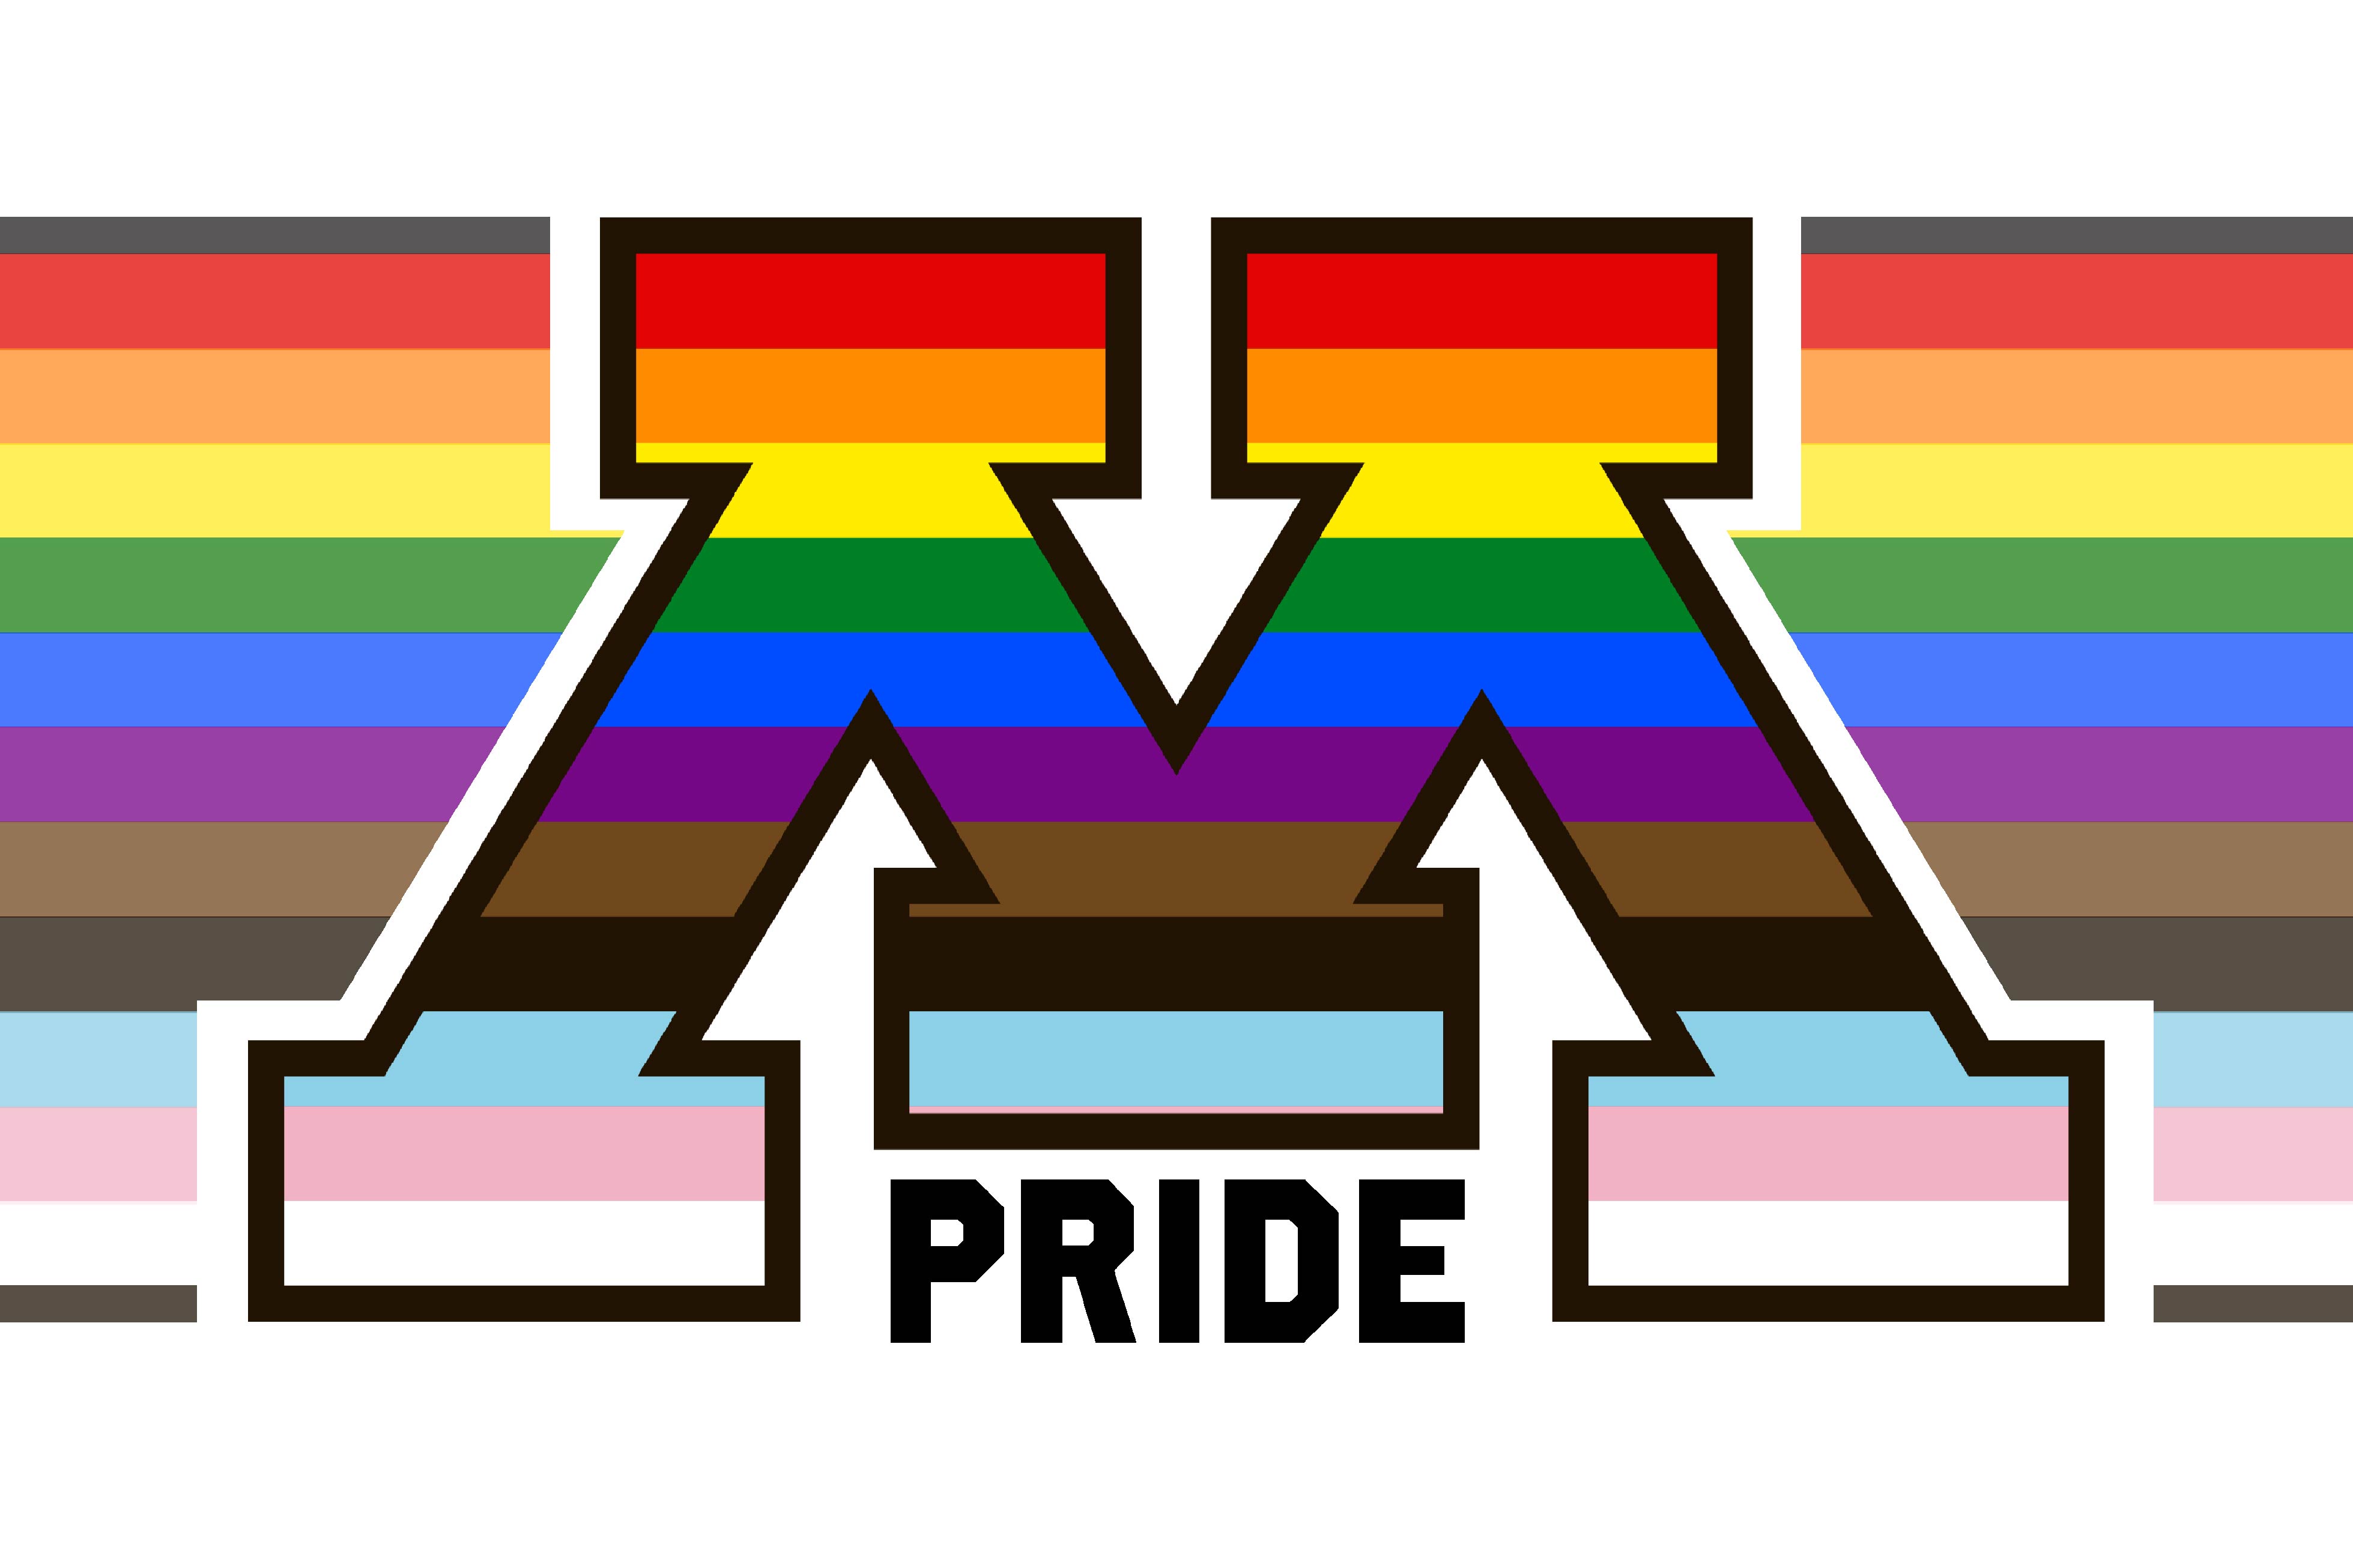 Rainbow M logo with the word PRIDE underneath